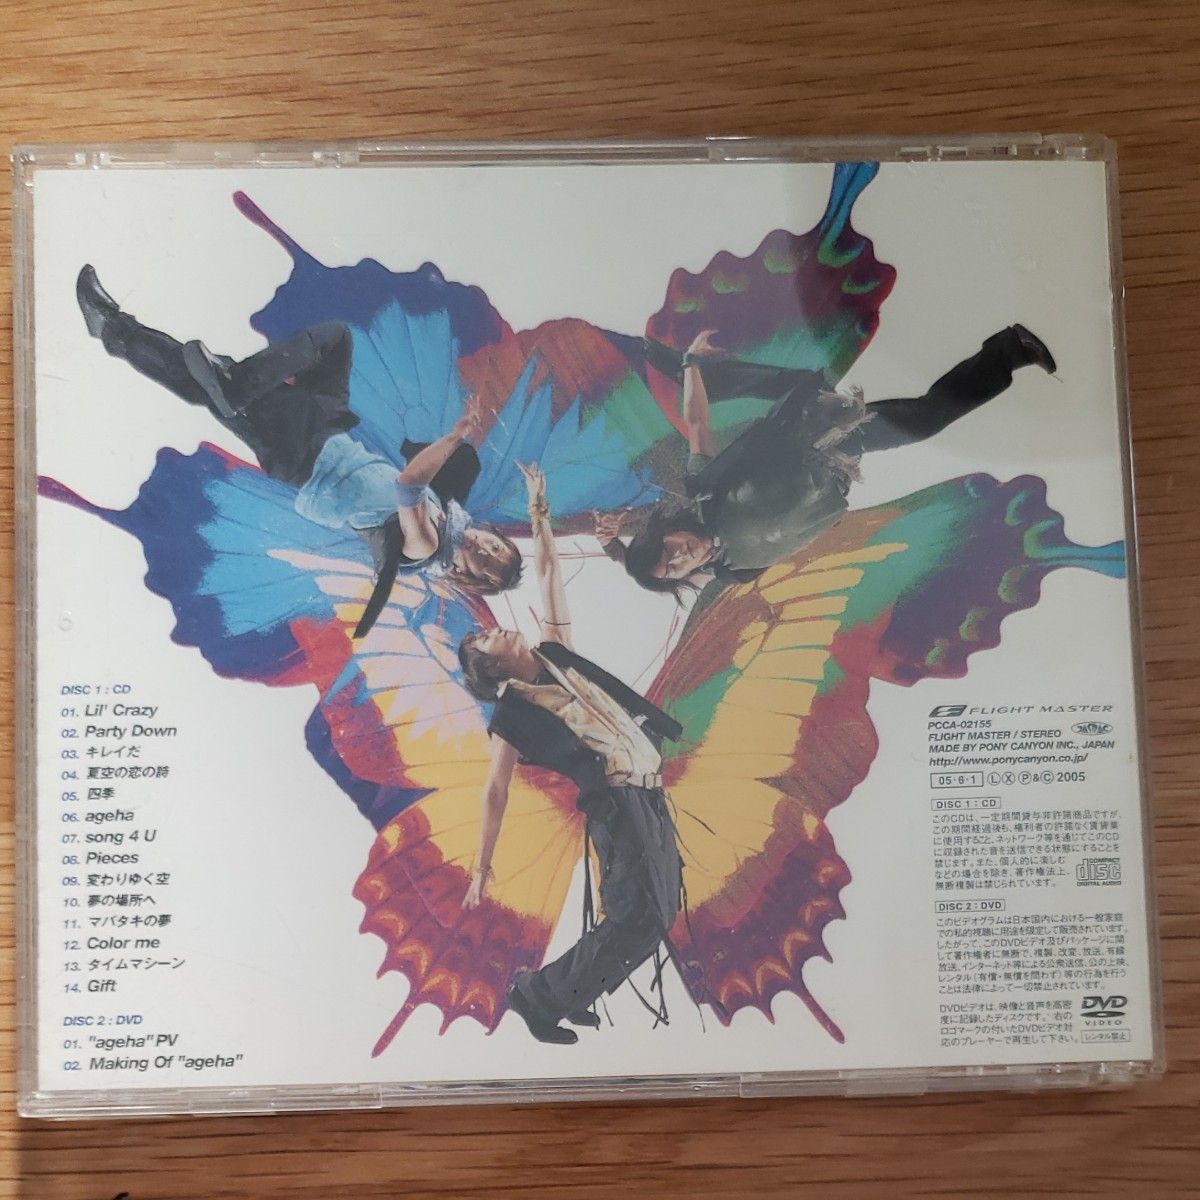 w-inds.ageha　CD/DVD　アルバム 